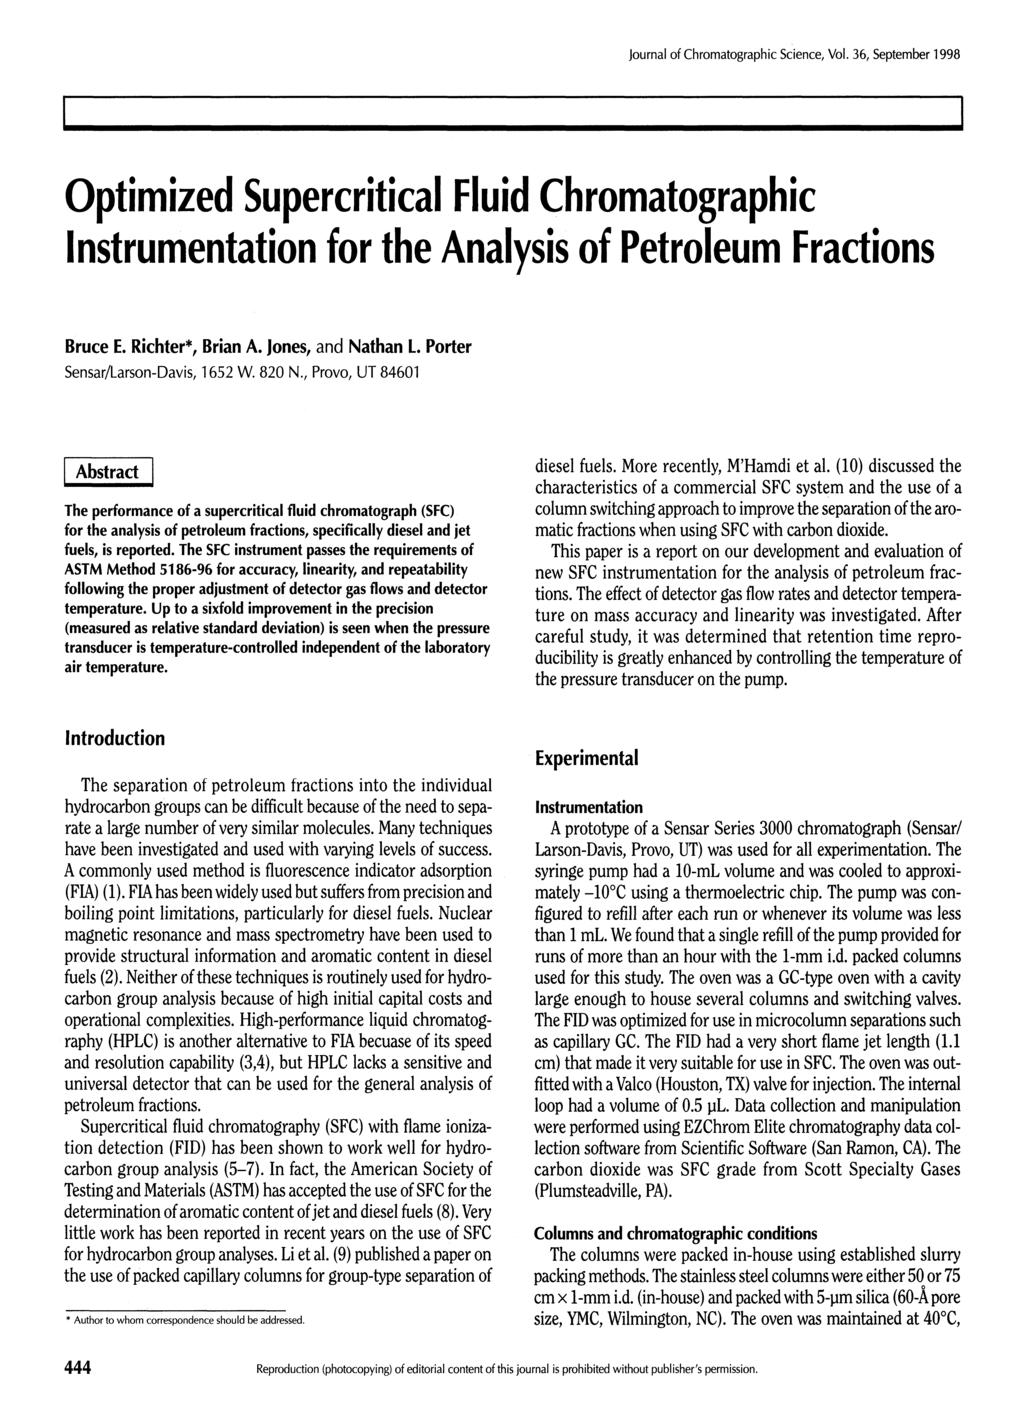 Optimized Supercritical Fluid Chromatographic Instrumentation for the Analysis of Petroleum Fractions Bruce E. Richter*, Brian A. Jones, and Nathan L Porter Sensar/Larson-Davis, 1652 W. 820 N.